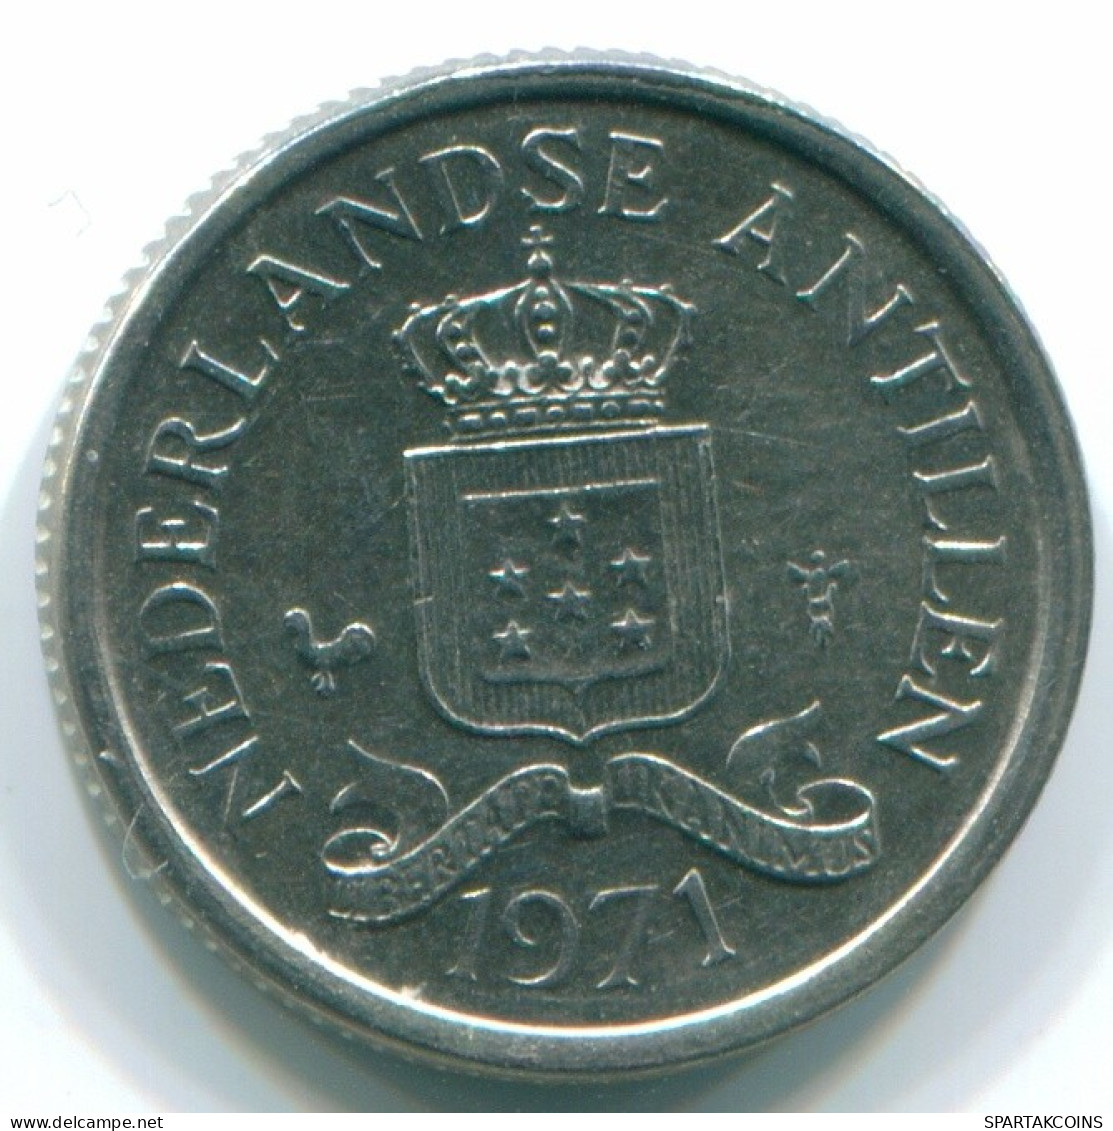 10 CENTS 1971 NIEDERLÄNDISCHE ANTILLEN Nickel Koloniale Münze #S13433.D.A - Nederlandse Antillen